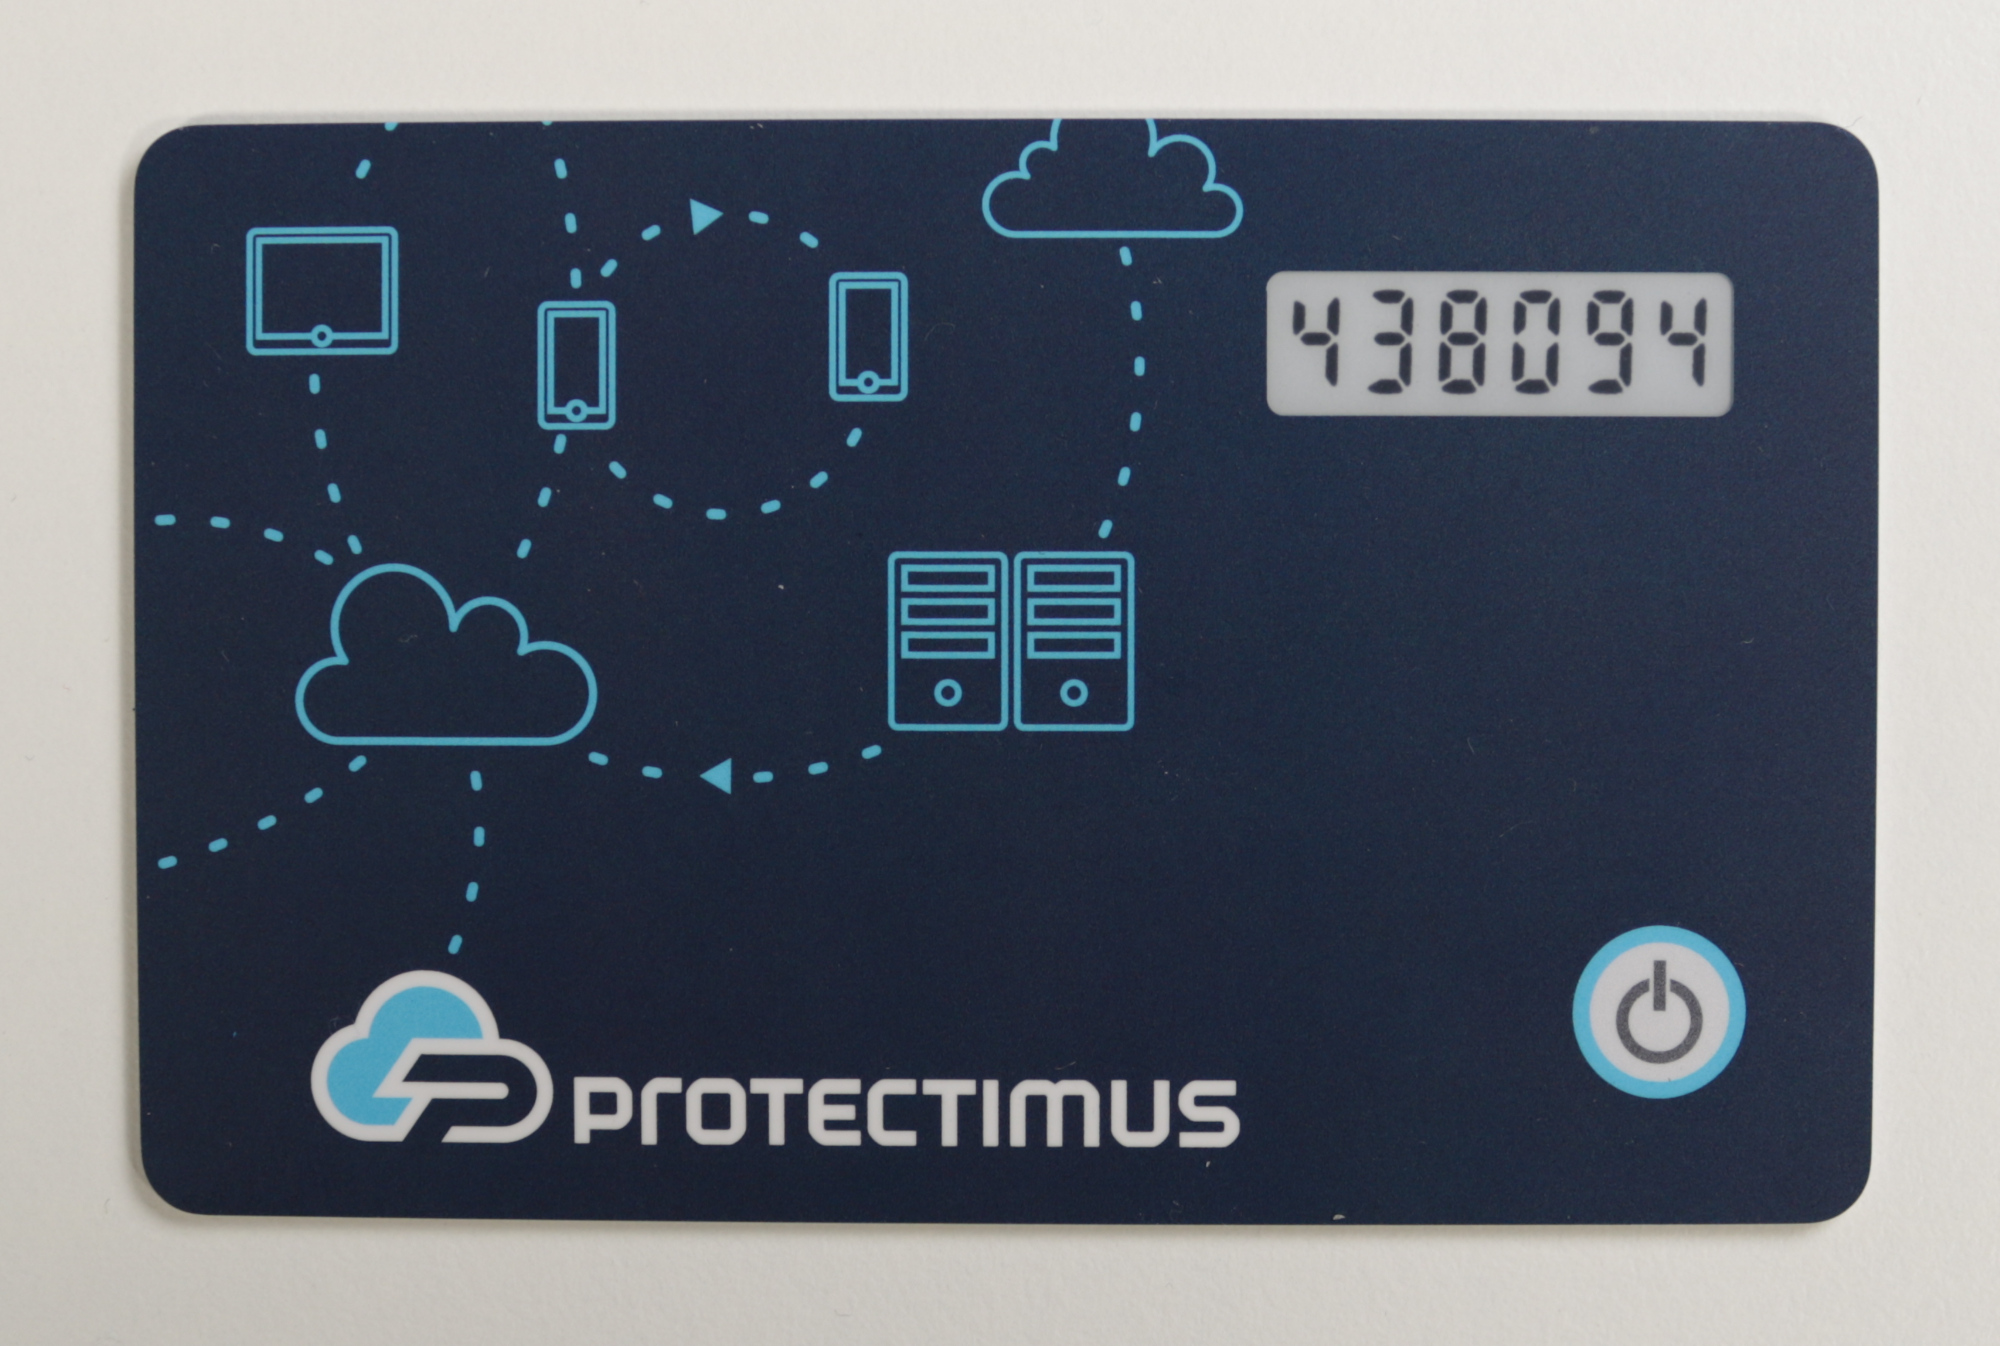 Protectimus SLIM NFC hardware TOTP token